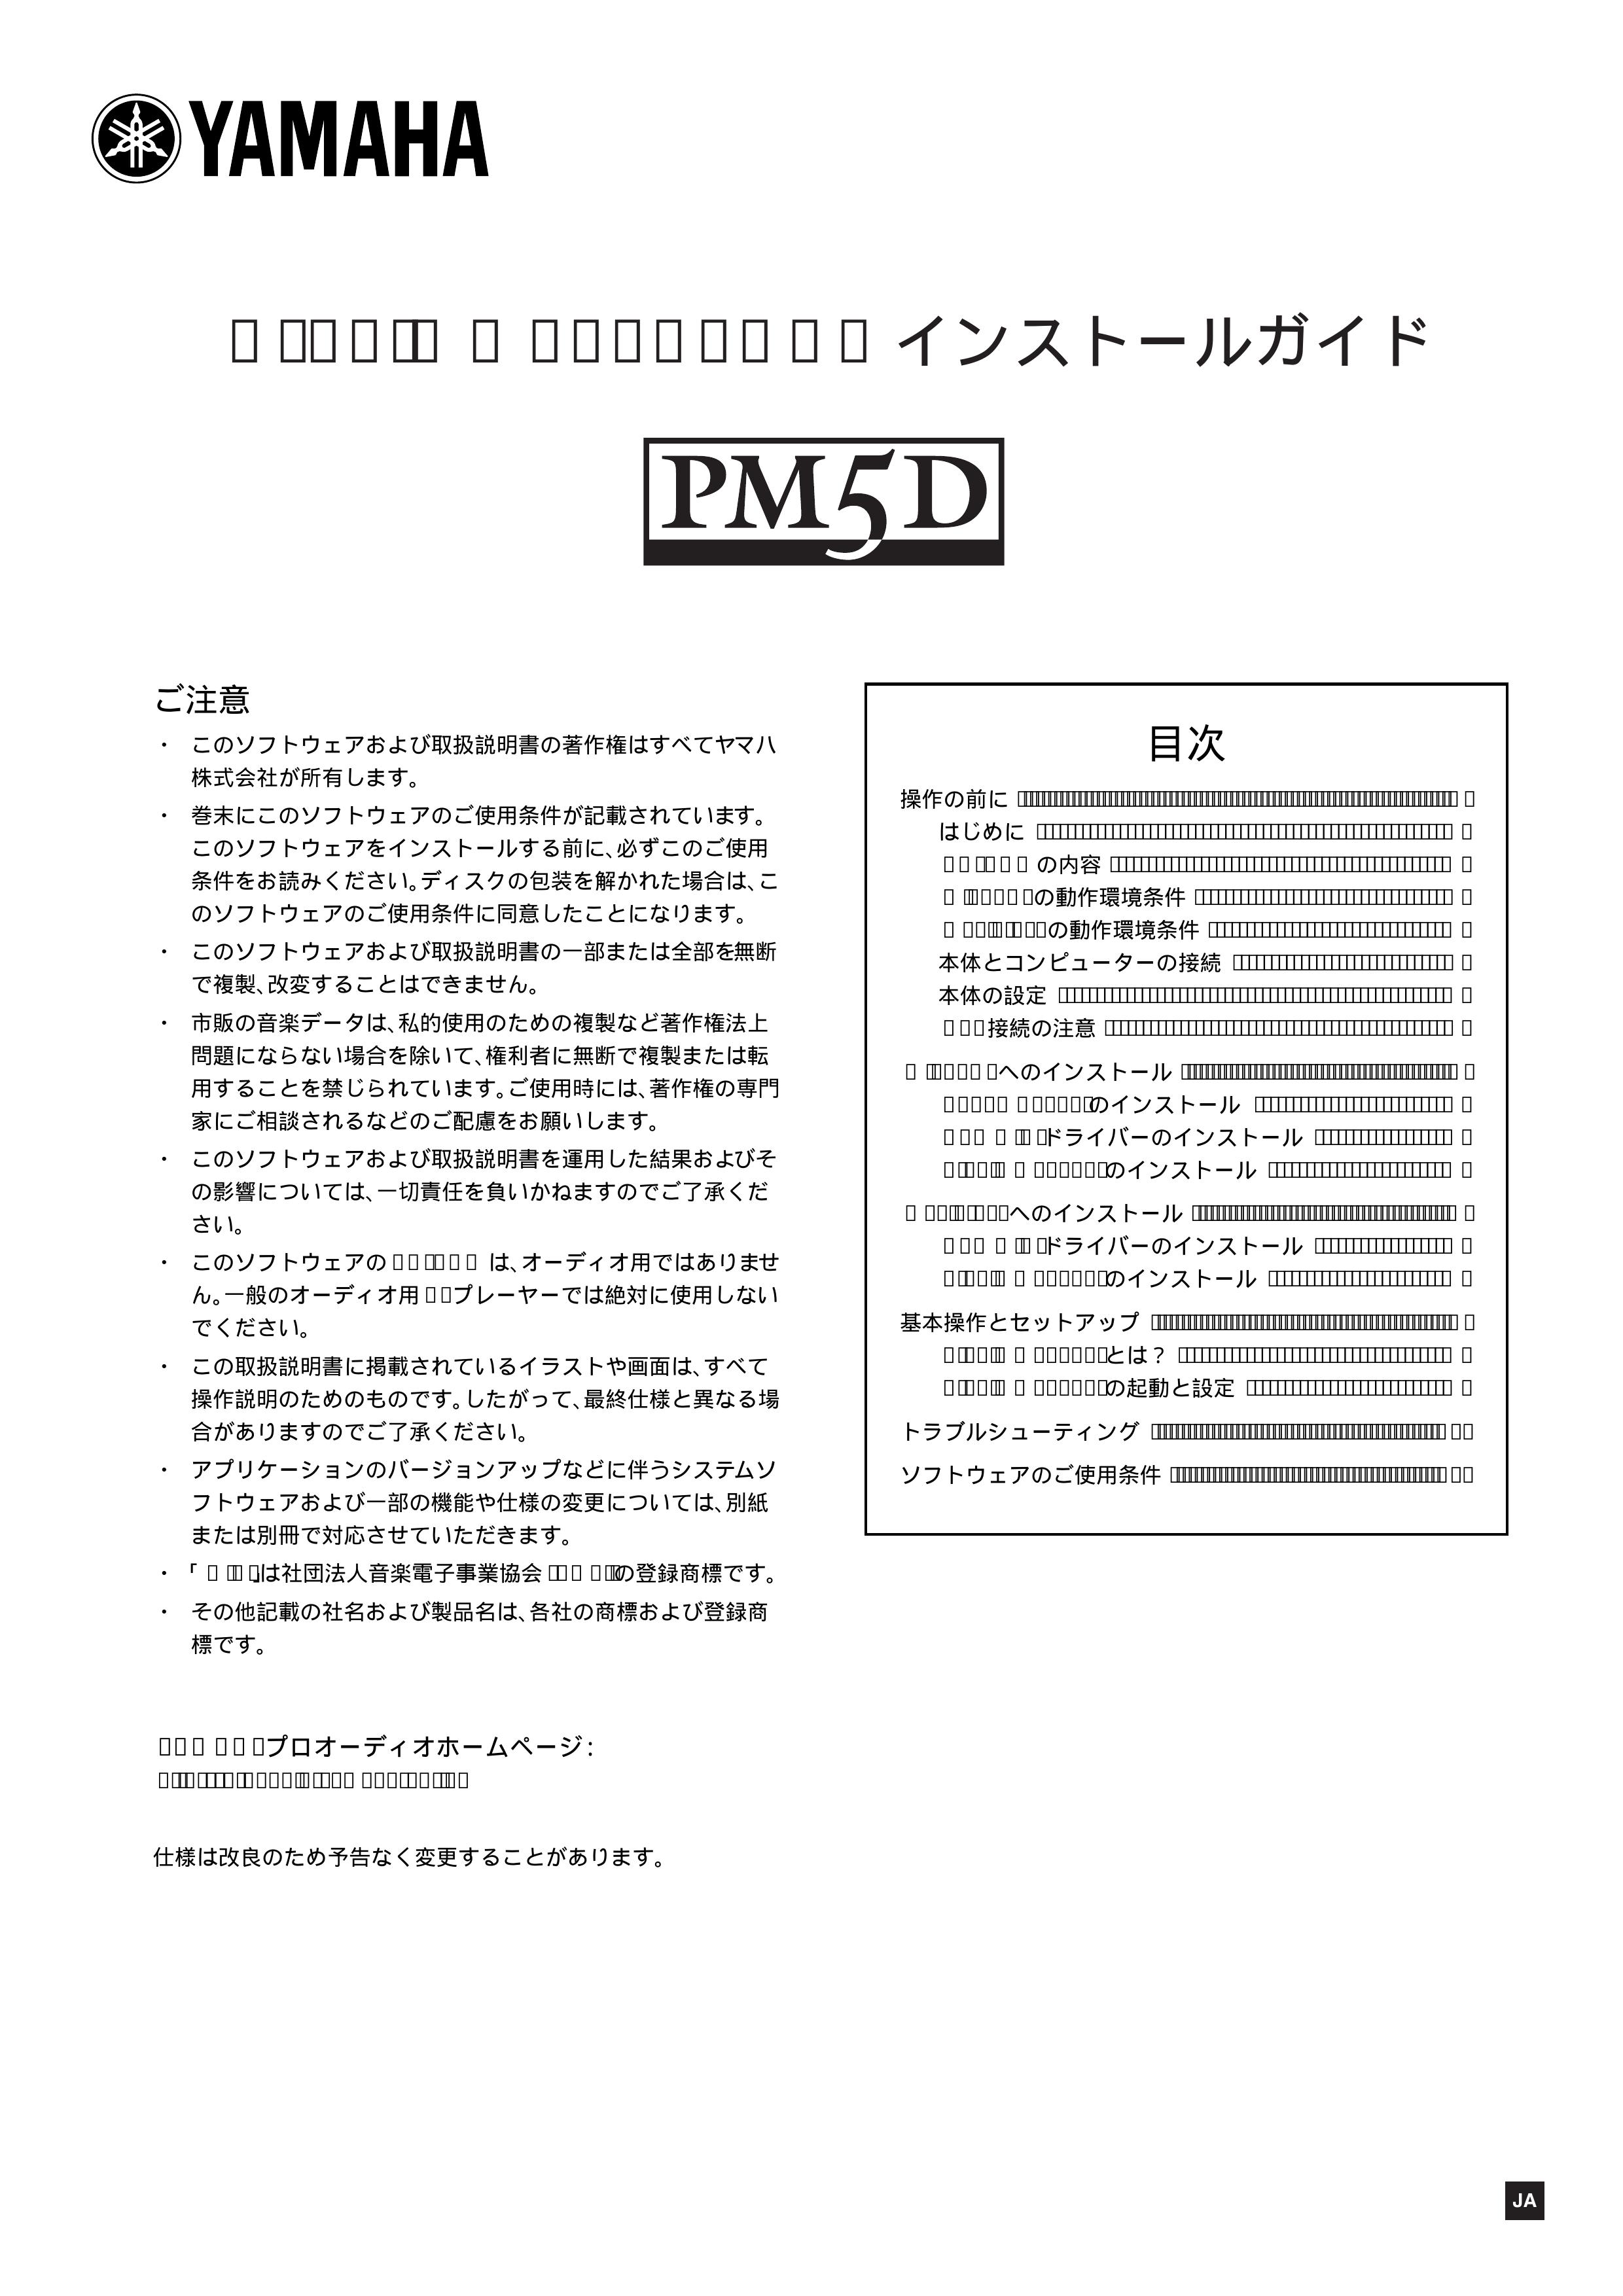 Yamaha PM5D Recording Equipment User Manual